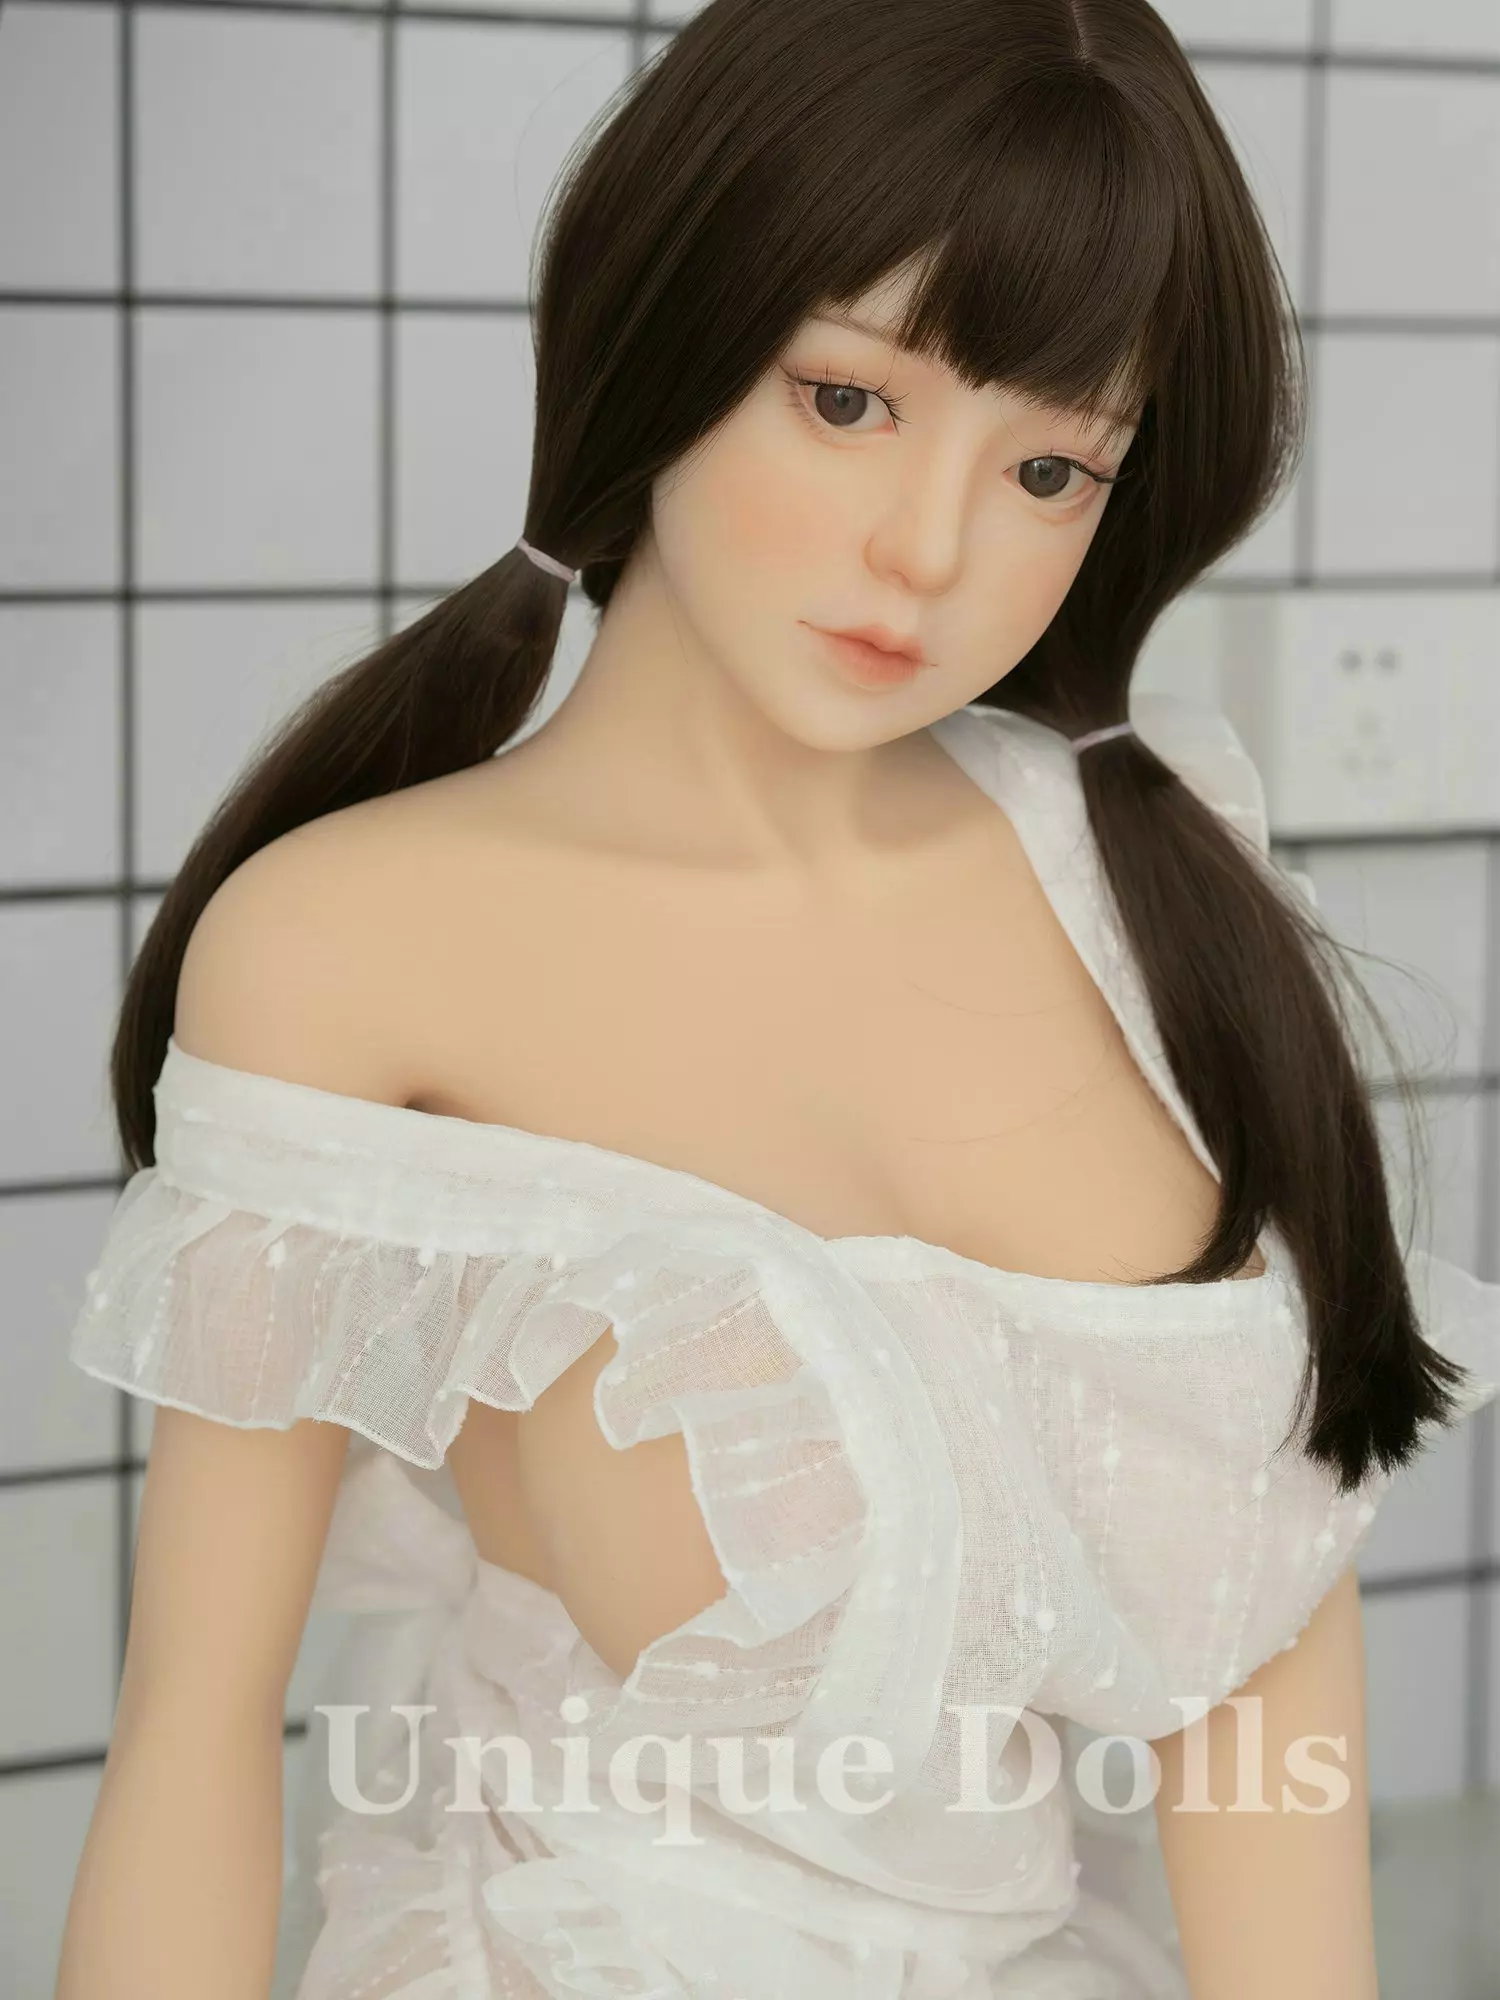 AXB-140cm big breasts doll Caltin